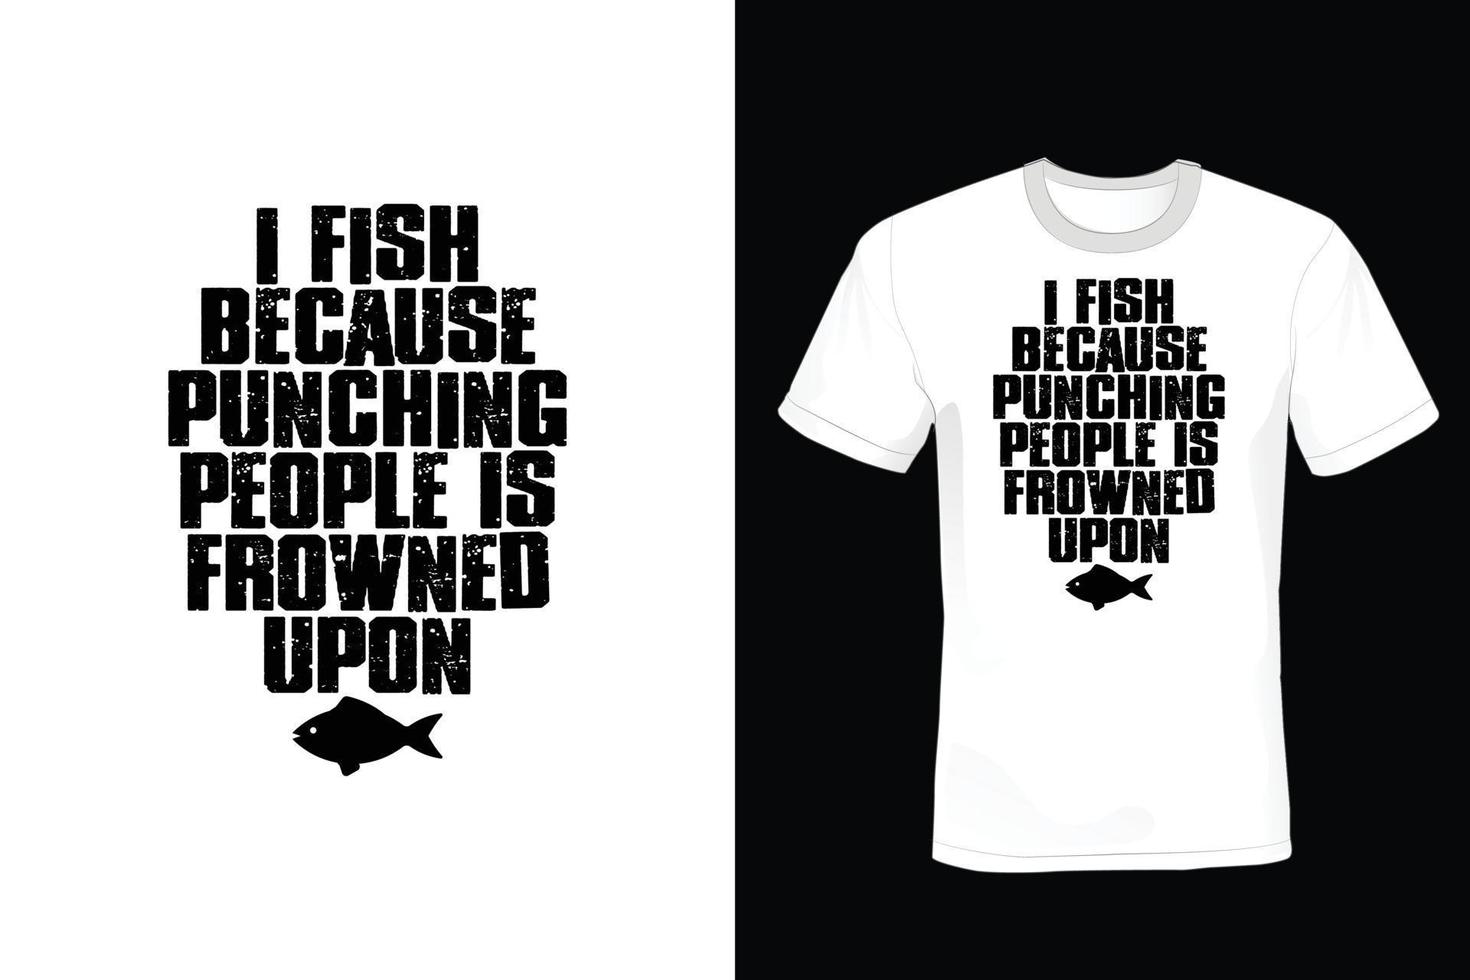 fiske t-shirt design, vintage, typografi vektor